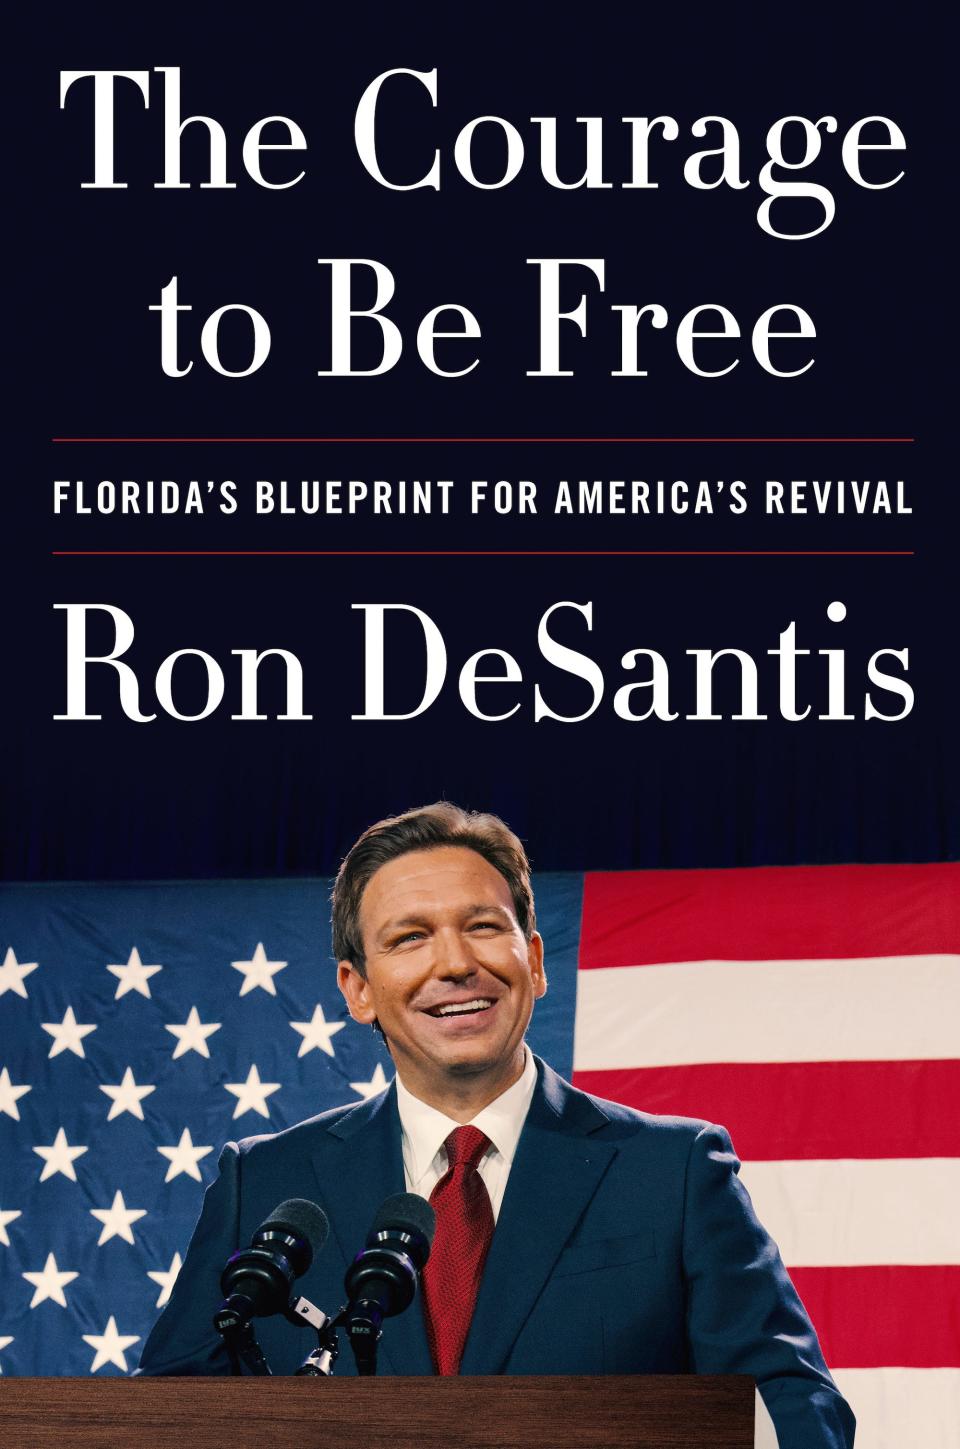 Florida Gov. Ron DeSantis published his first memoir on February 28, 2023.